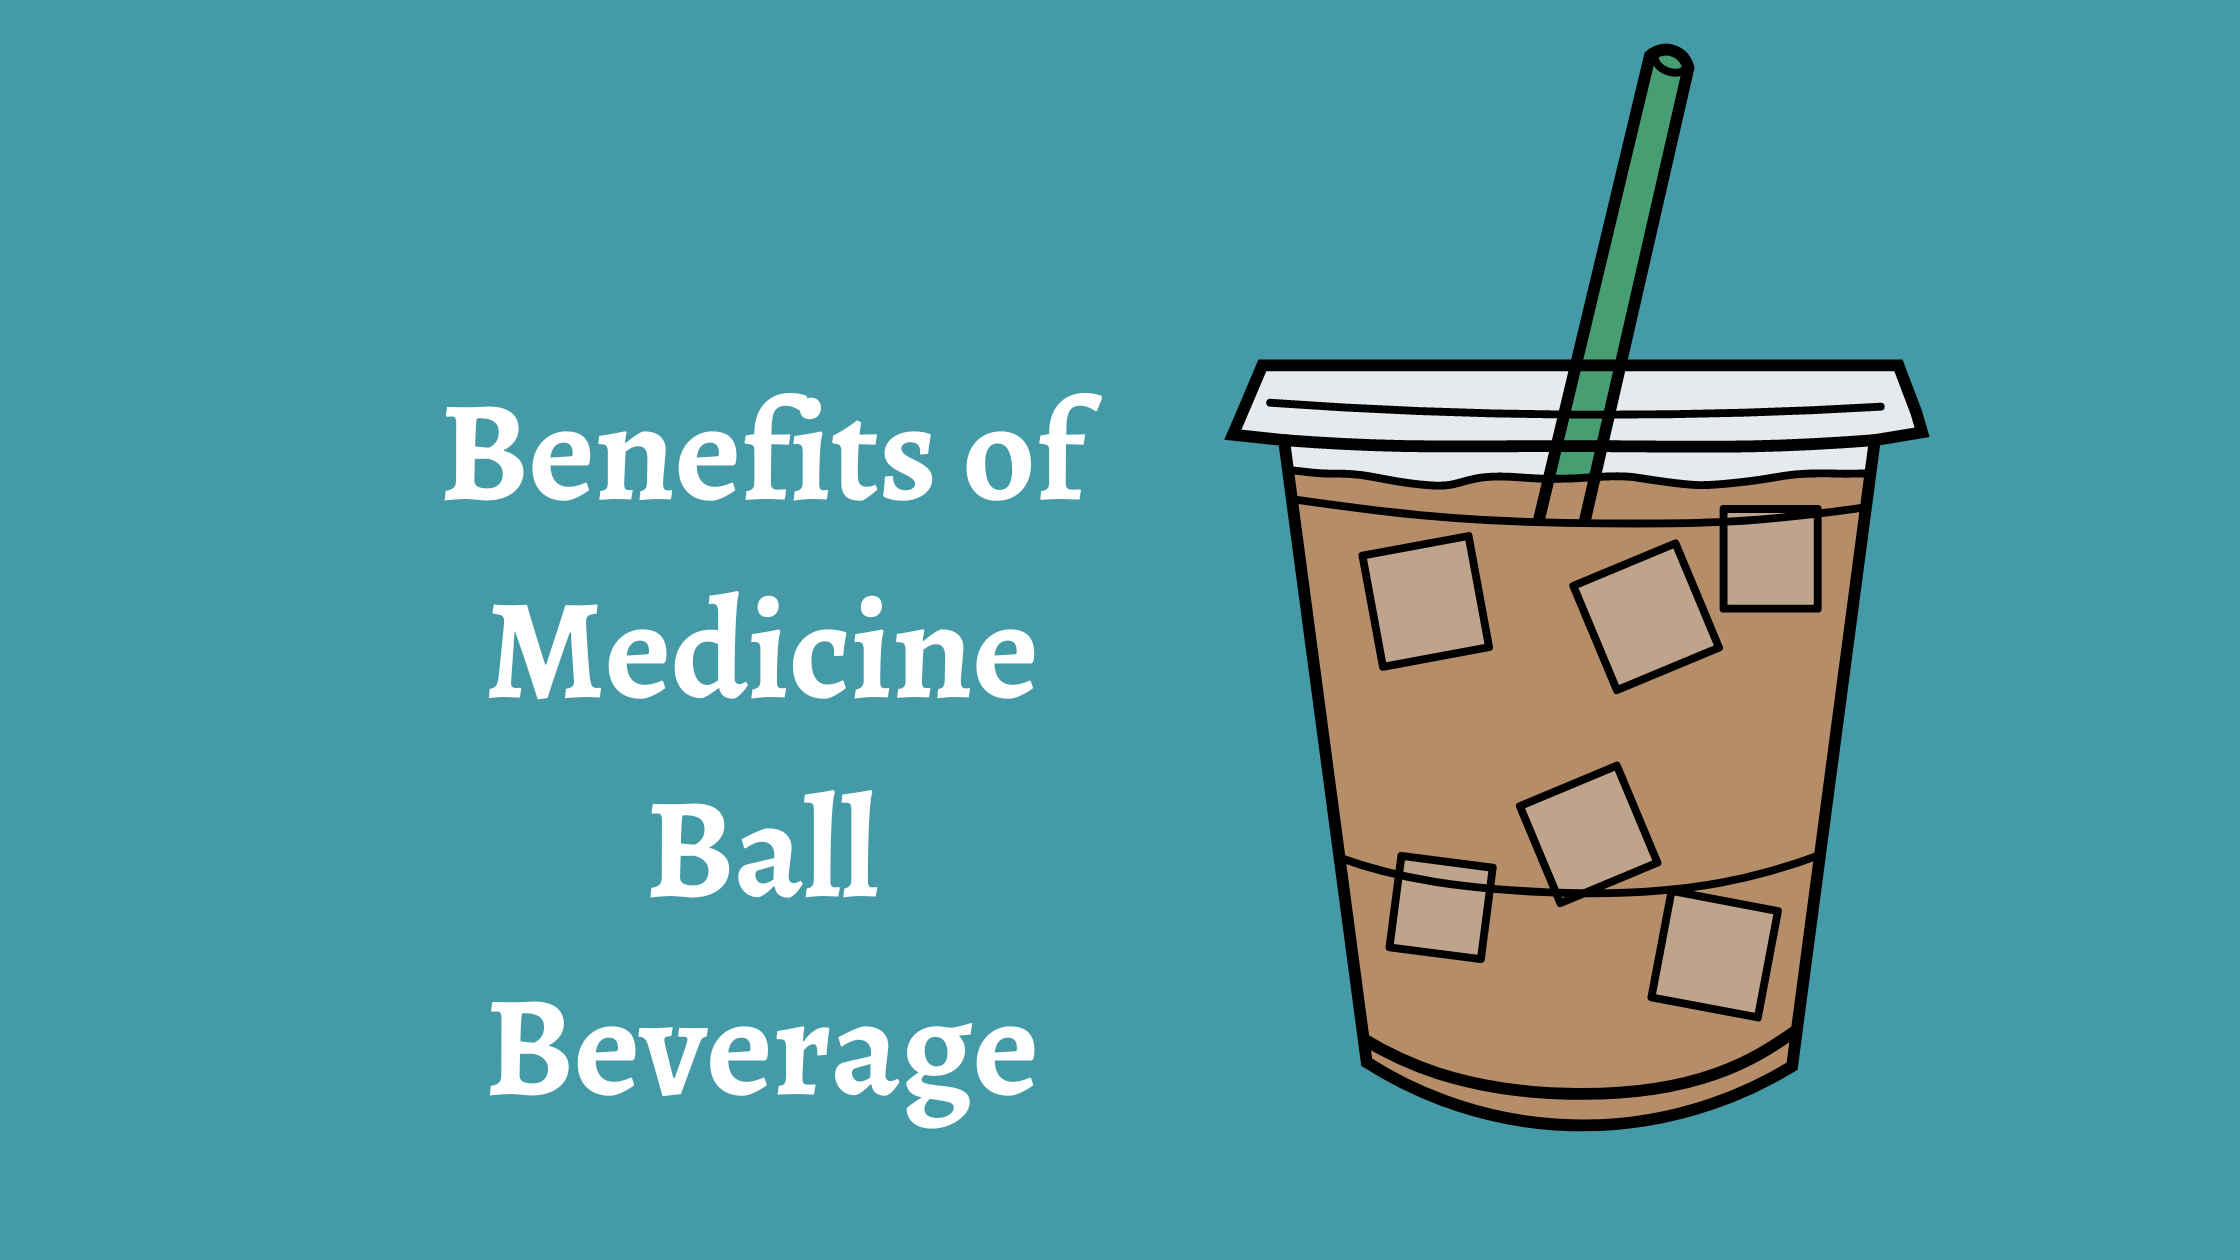 Benefits of Medicine Ball Beverage